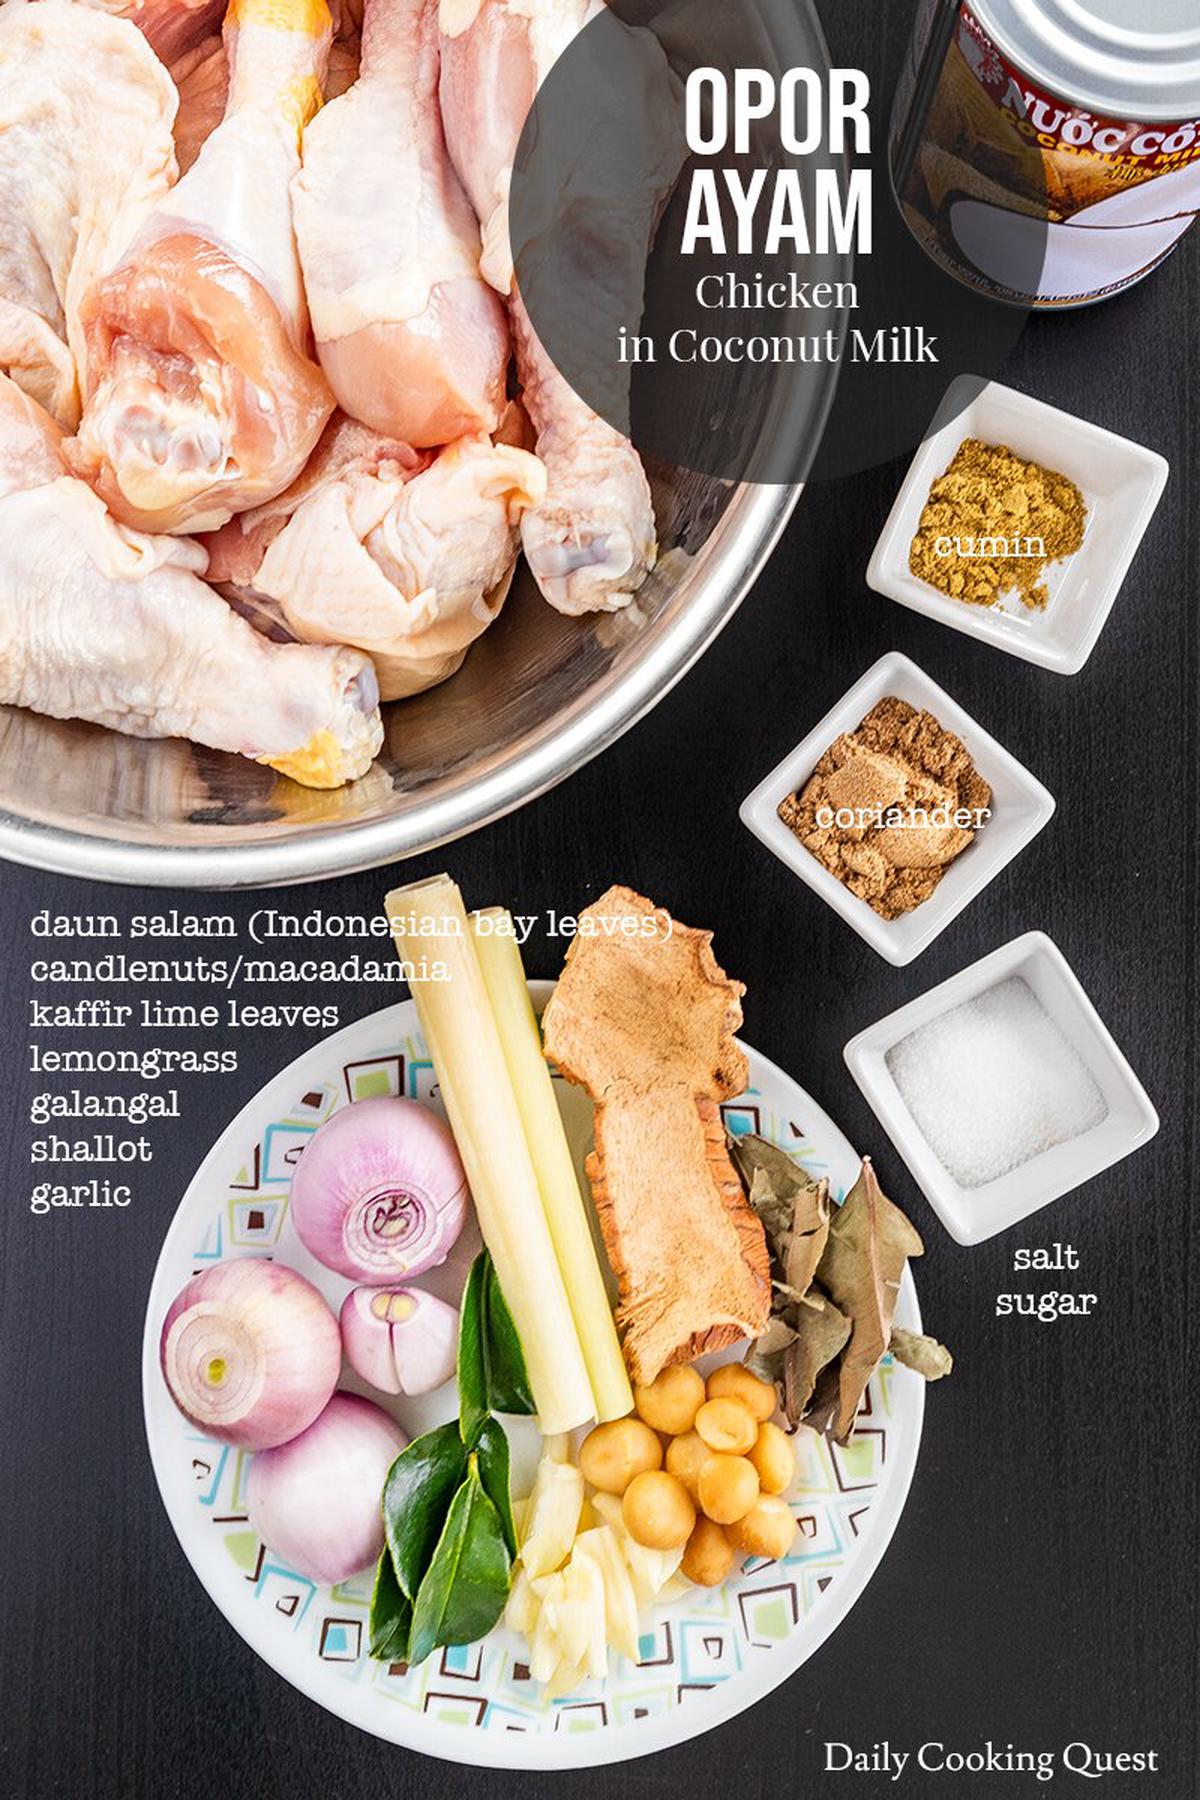 Ingredients for Opor Ayam - Chicken in Coconut Milk